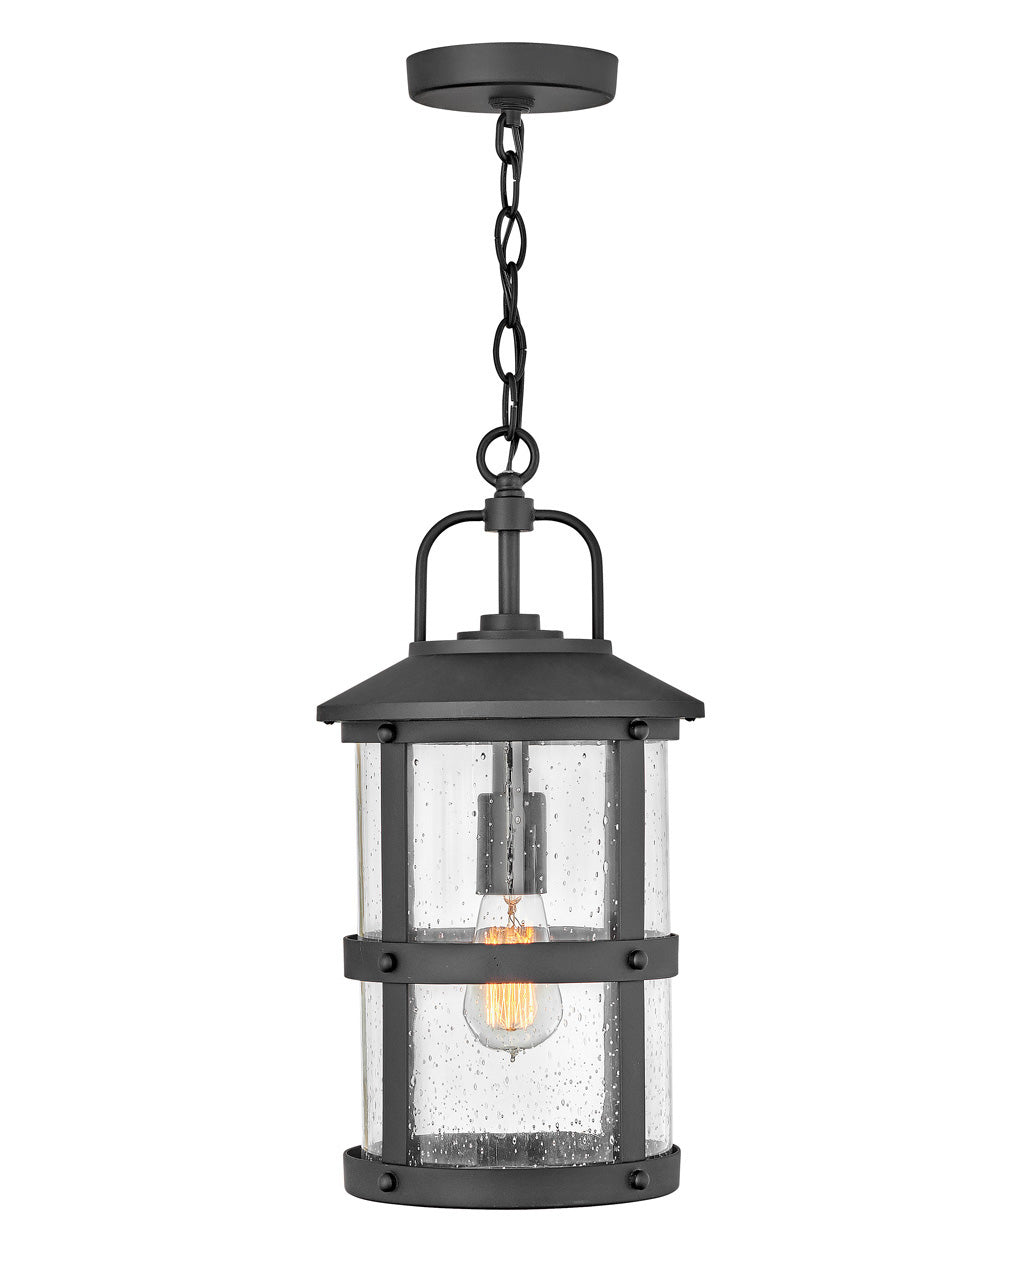 OUTDOOR LAKEHOUSE Hanging Lantern Outdoor Light Fixture l Hanging Hinkley Black 9.0x9.0x17.75 